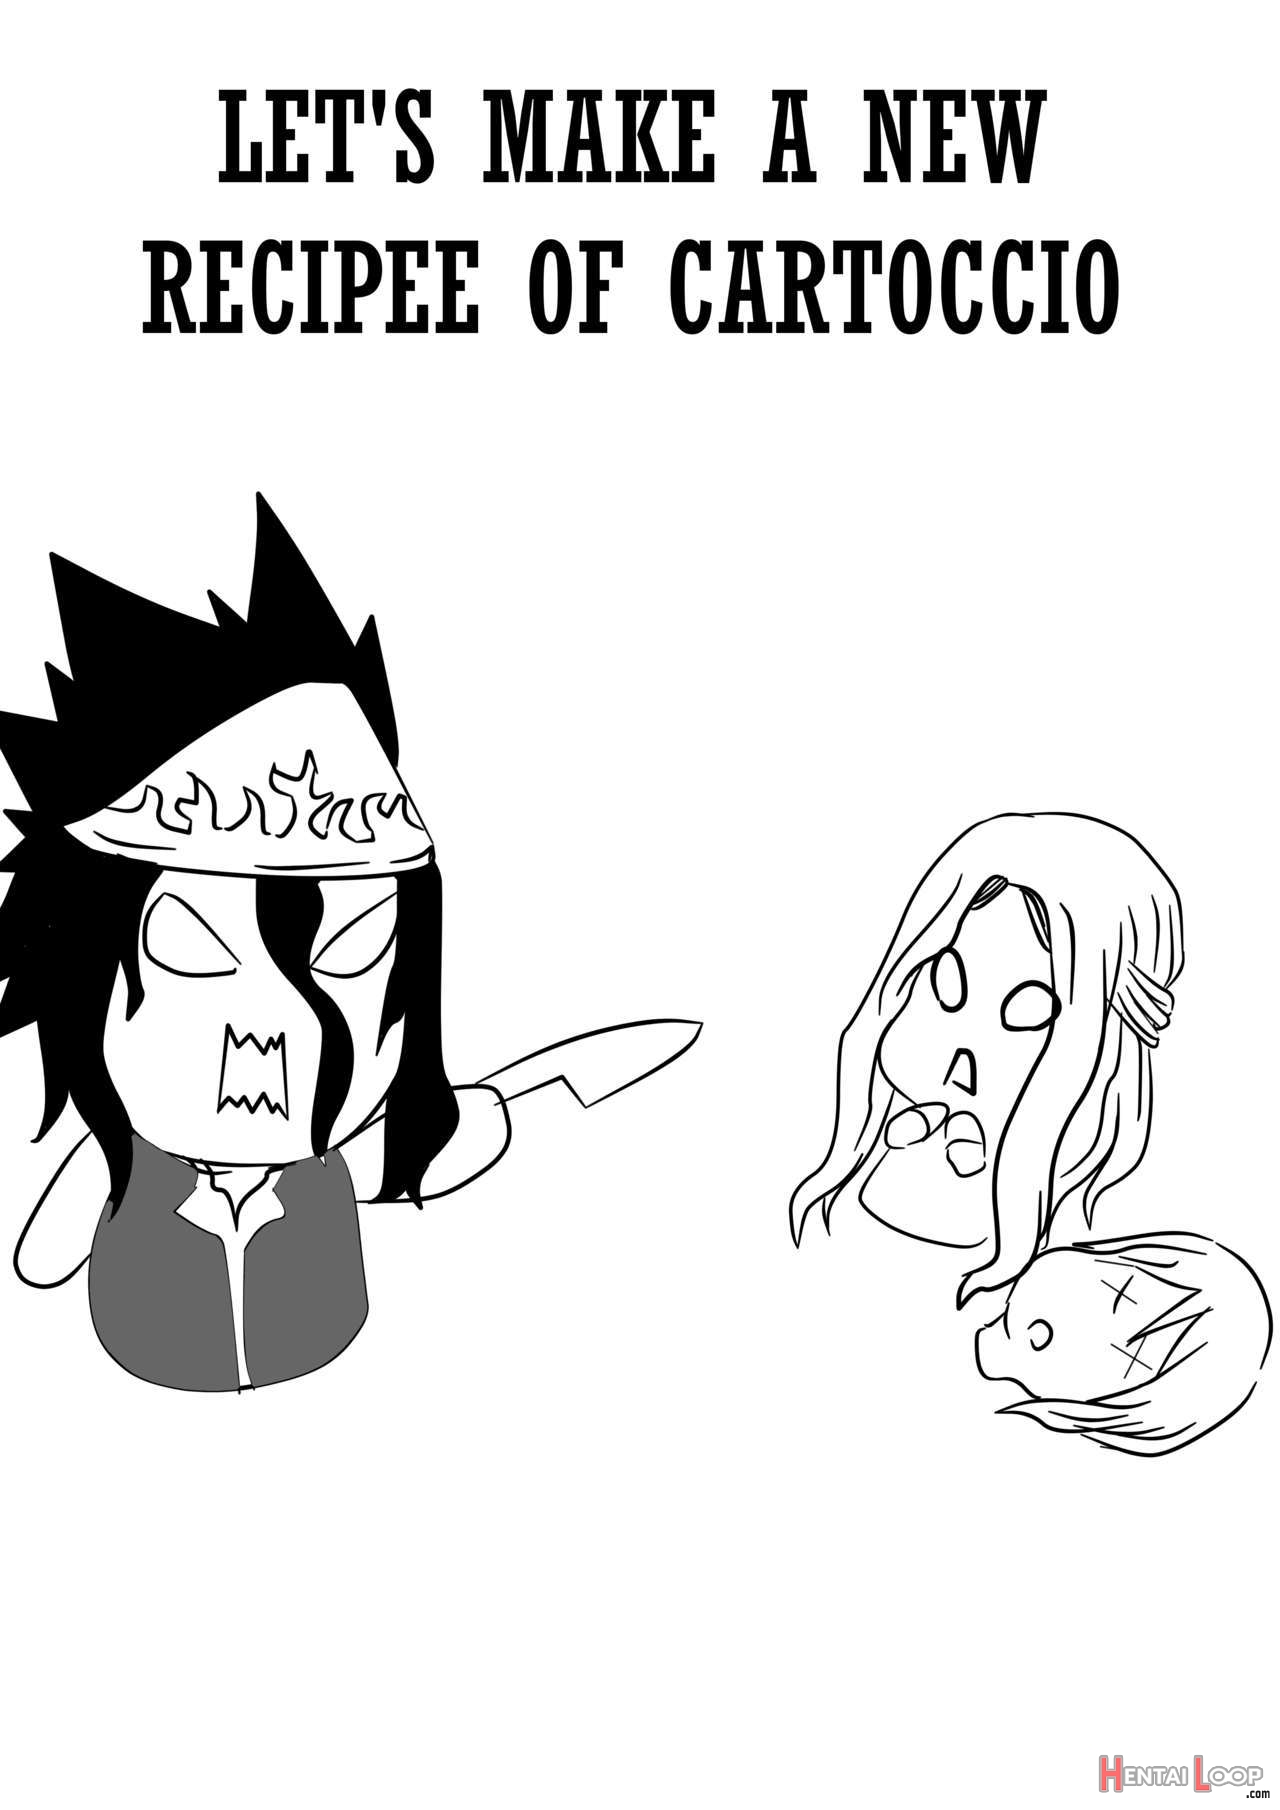 New Cartoccio Recipee page 1